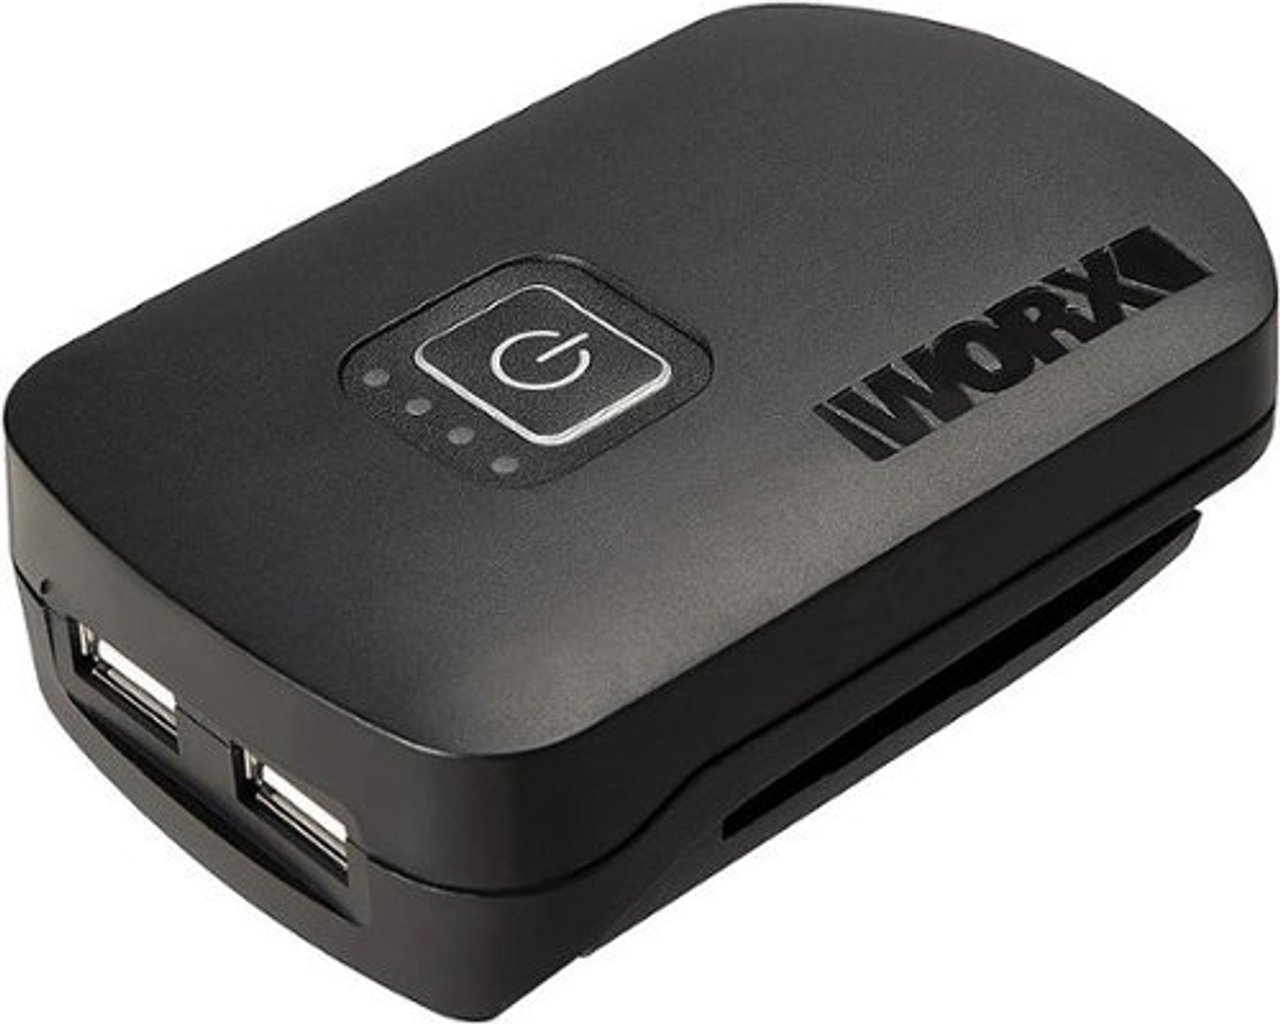 20V USB Charger Adapter for Worx Battery - Black